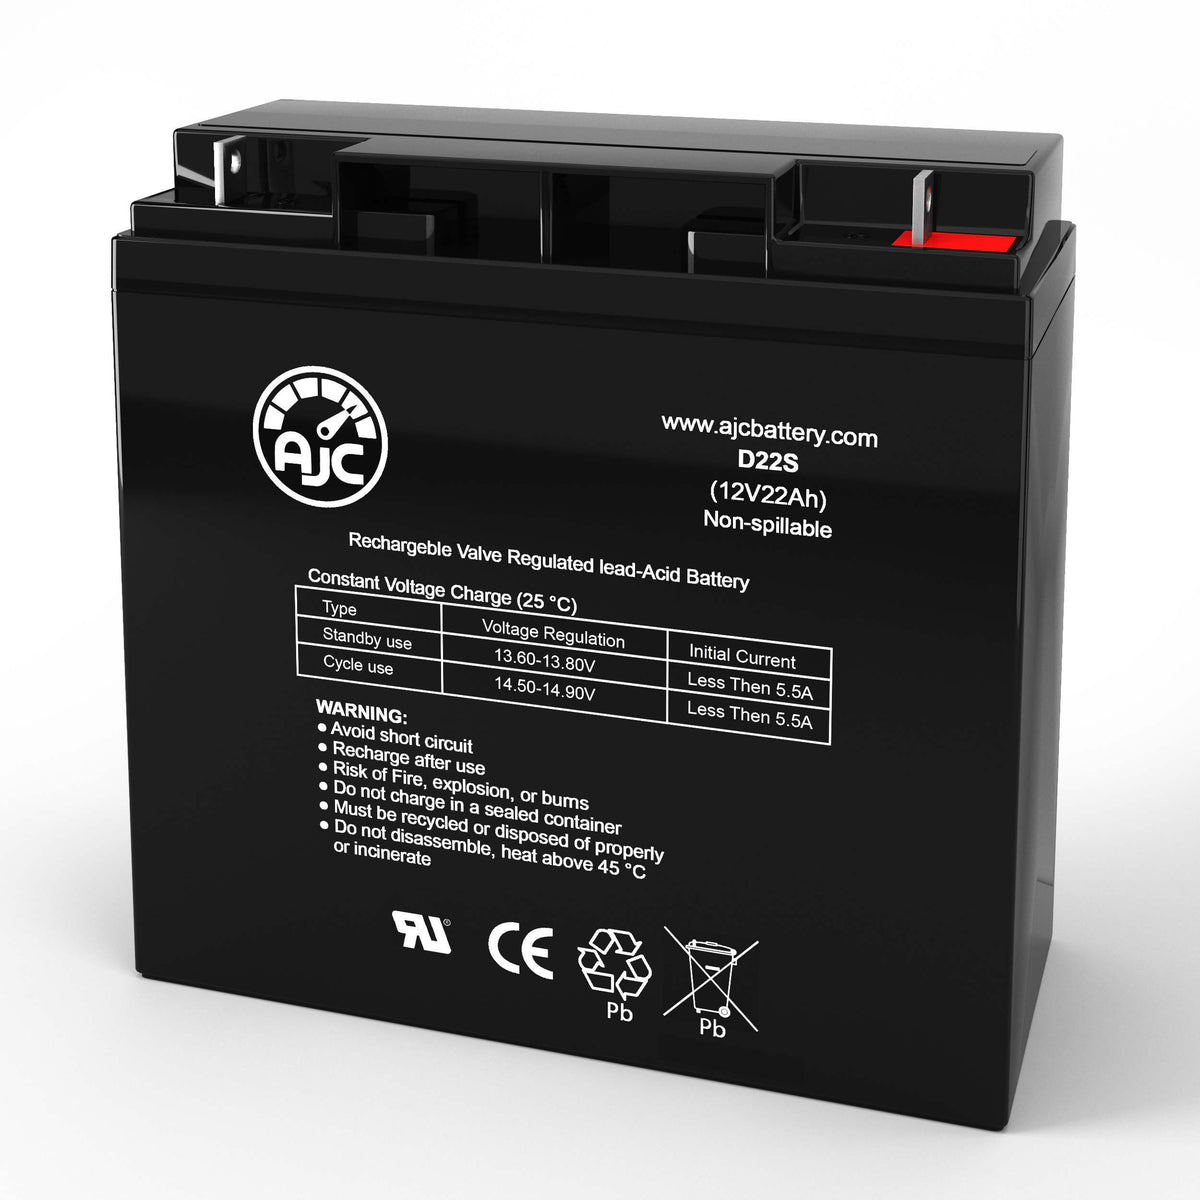 HP Batterie Trennschalter 12V 24V battery disconnector Trecker